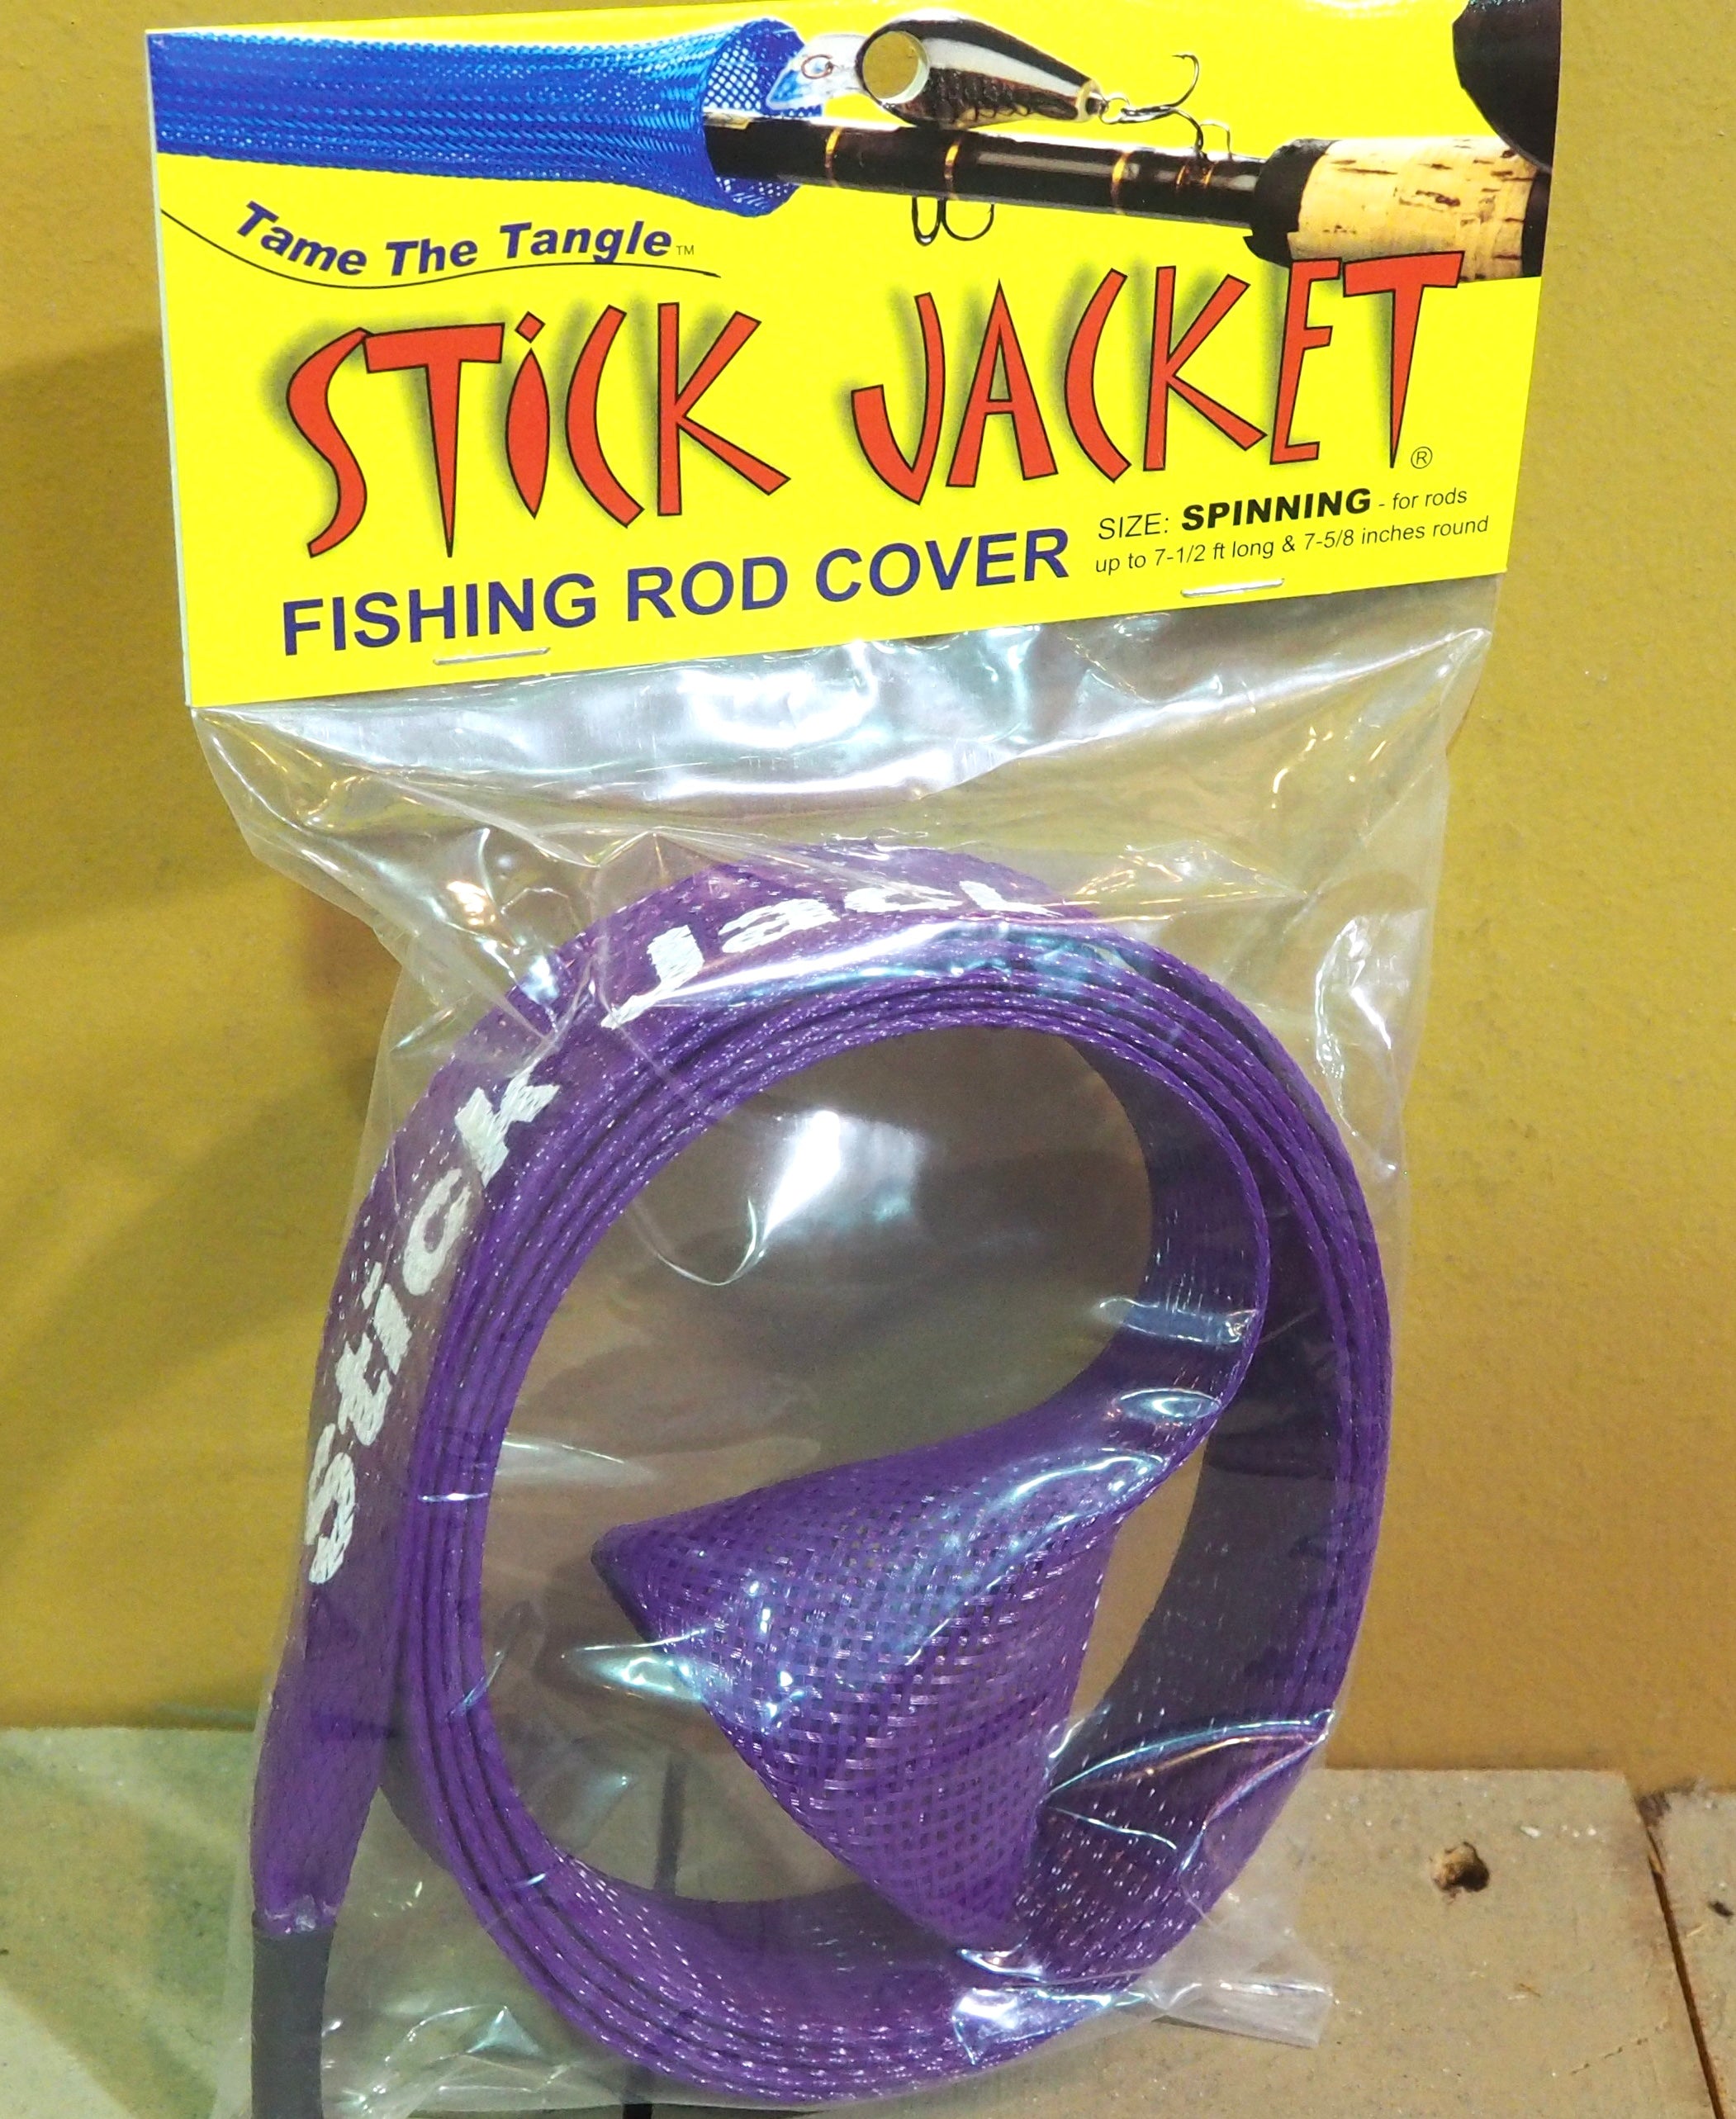 Stick Jacket Fishing Rod Covers Spinning Size